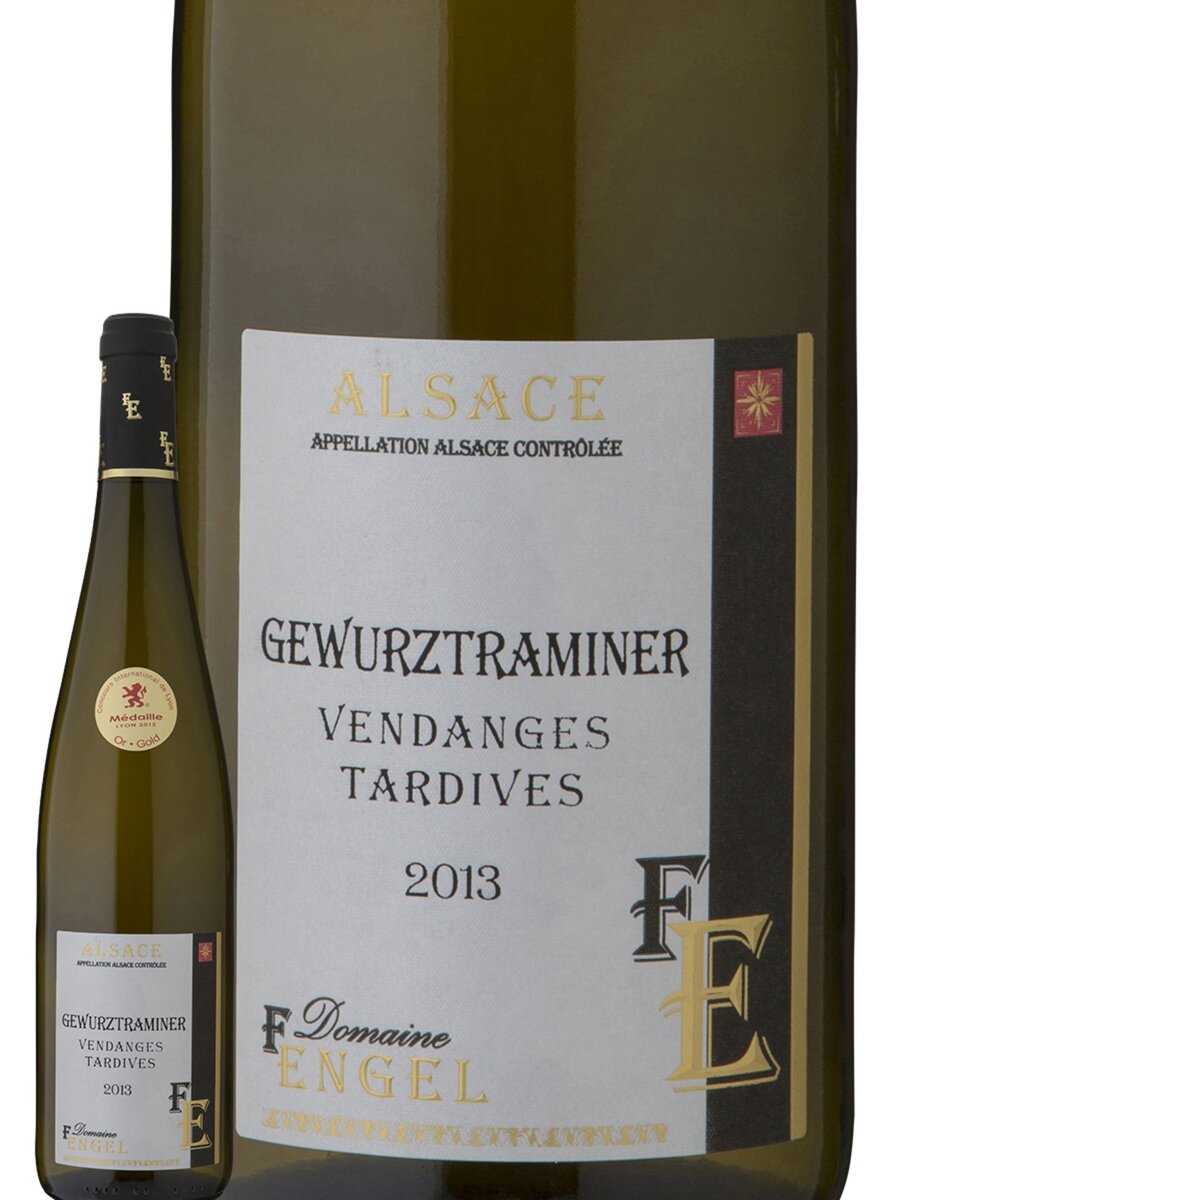 Domaine F.Engel Vendanges Tardives Gewurztraminer Blanc 2013